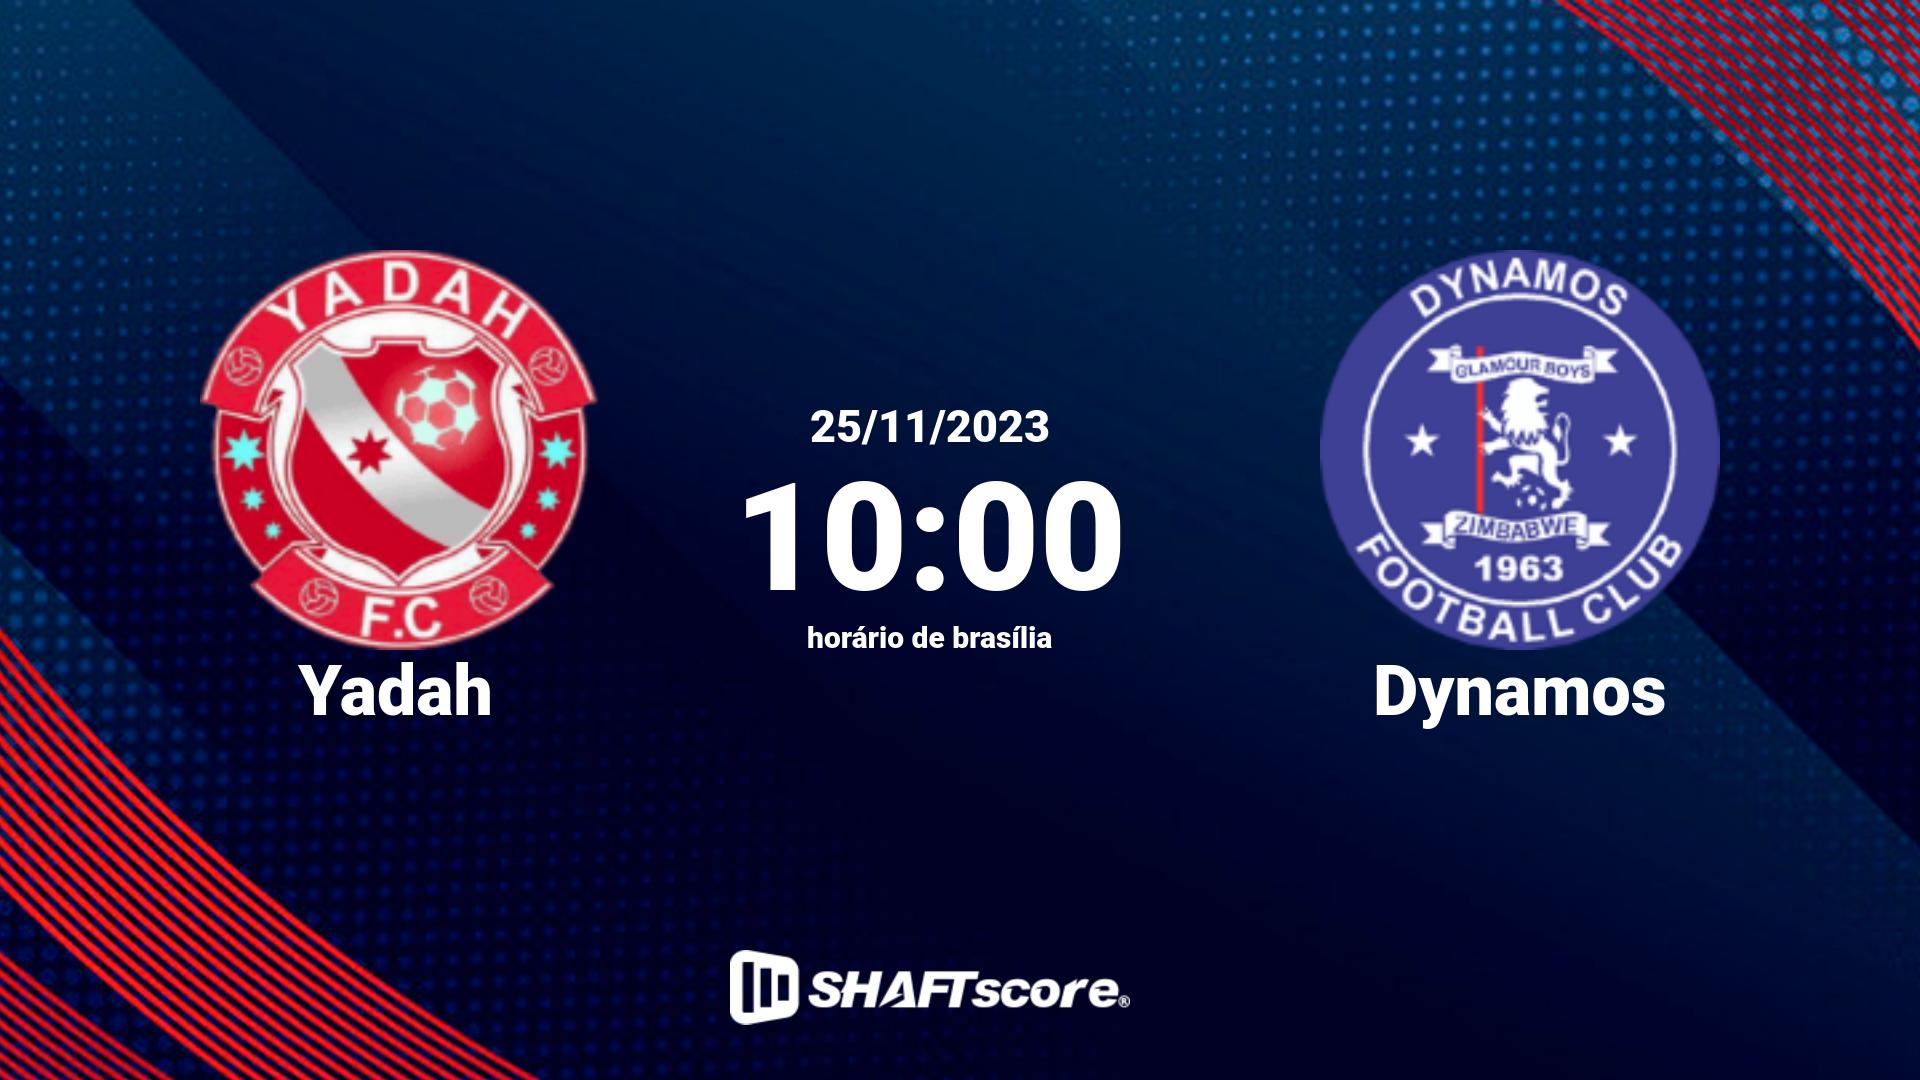 Estatísticas do jogo Yadah vs Dynamos 25.11 10:00